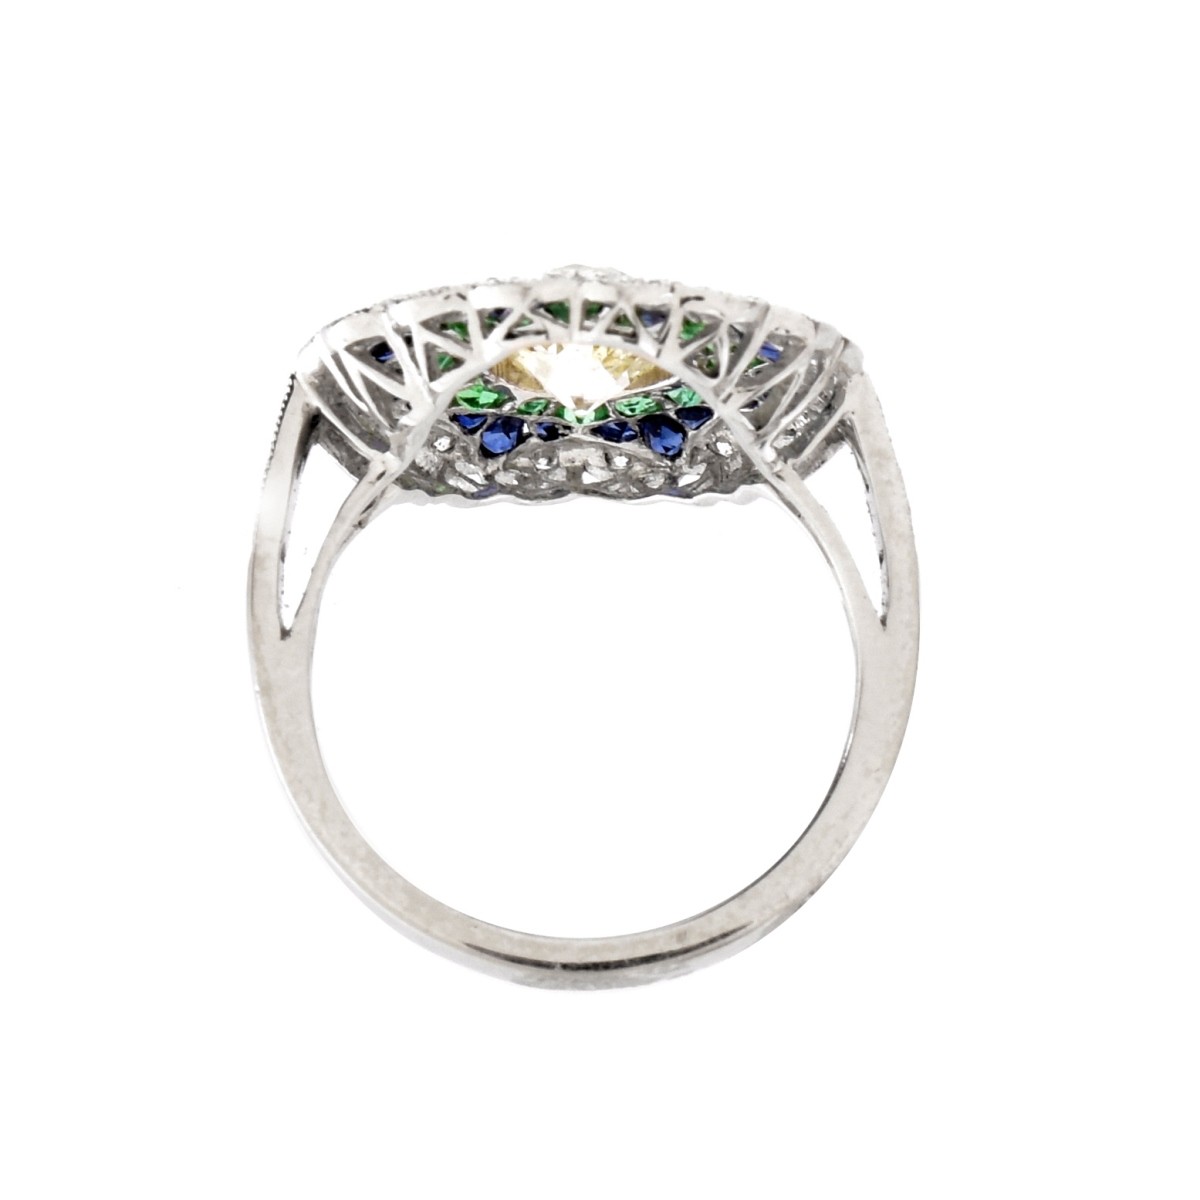 Diamond, Sapphire, Emerald and Platinum Ring